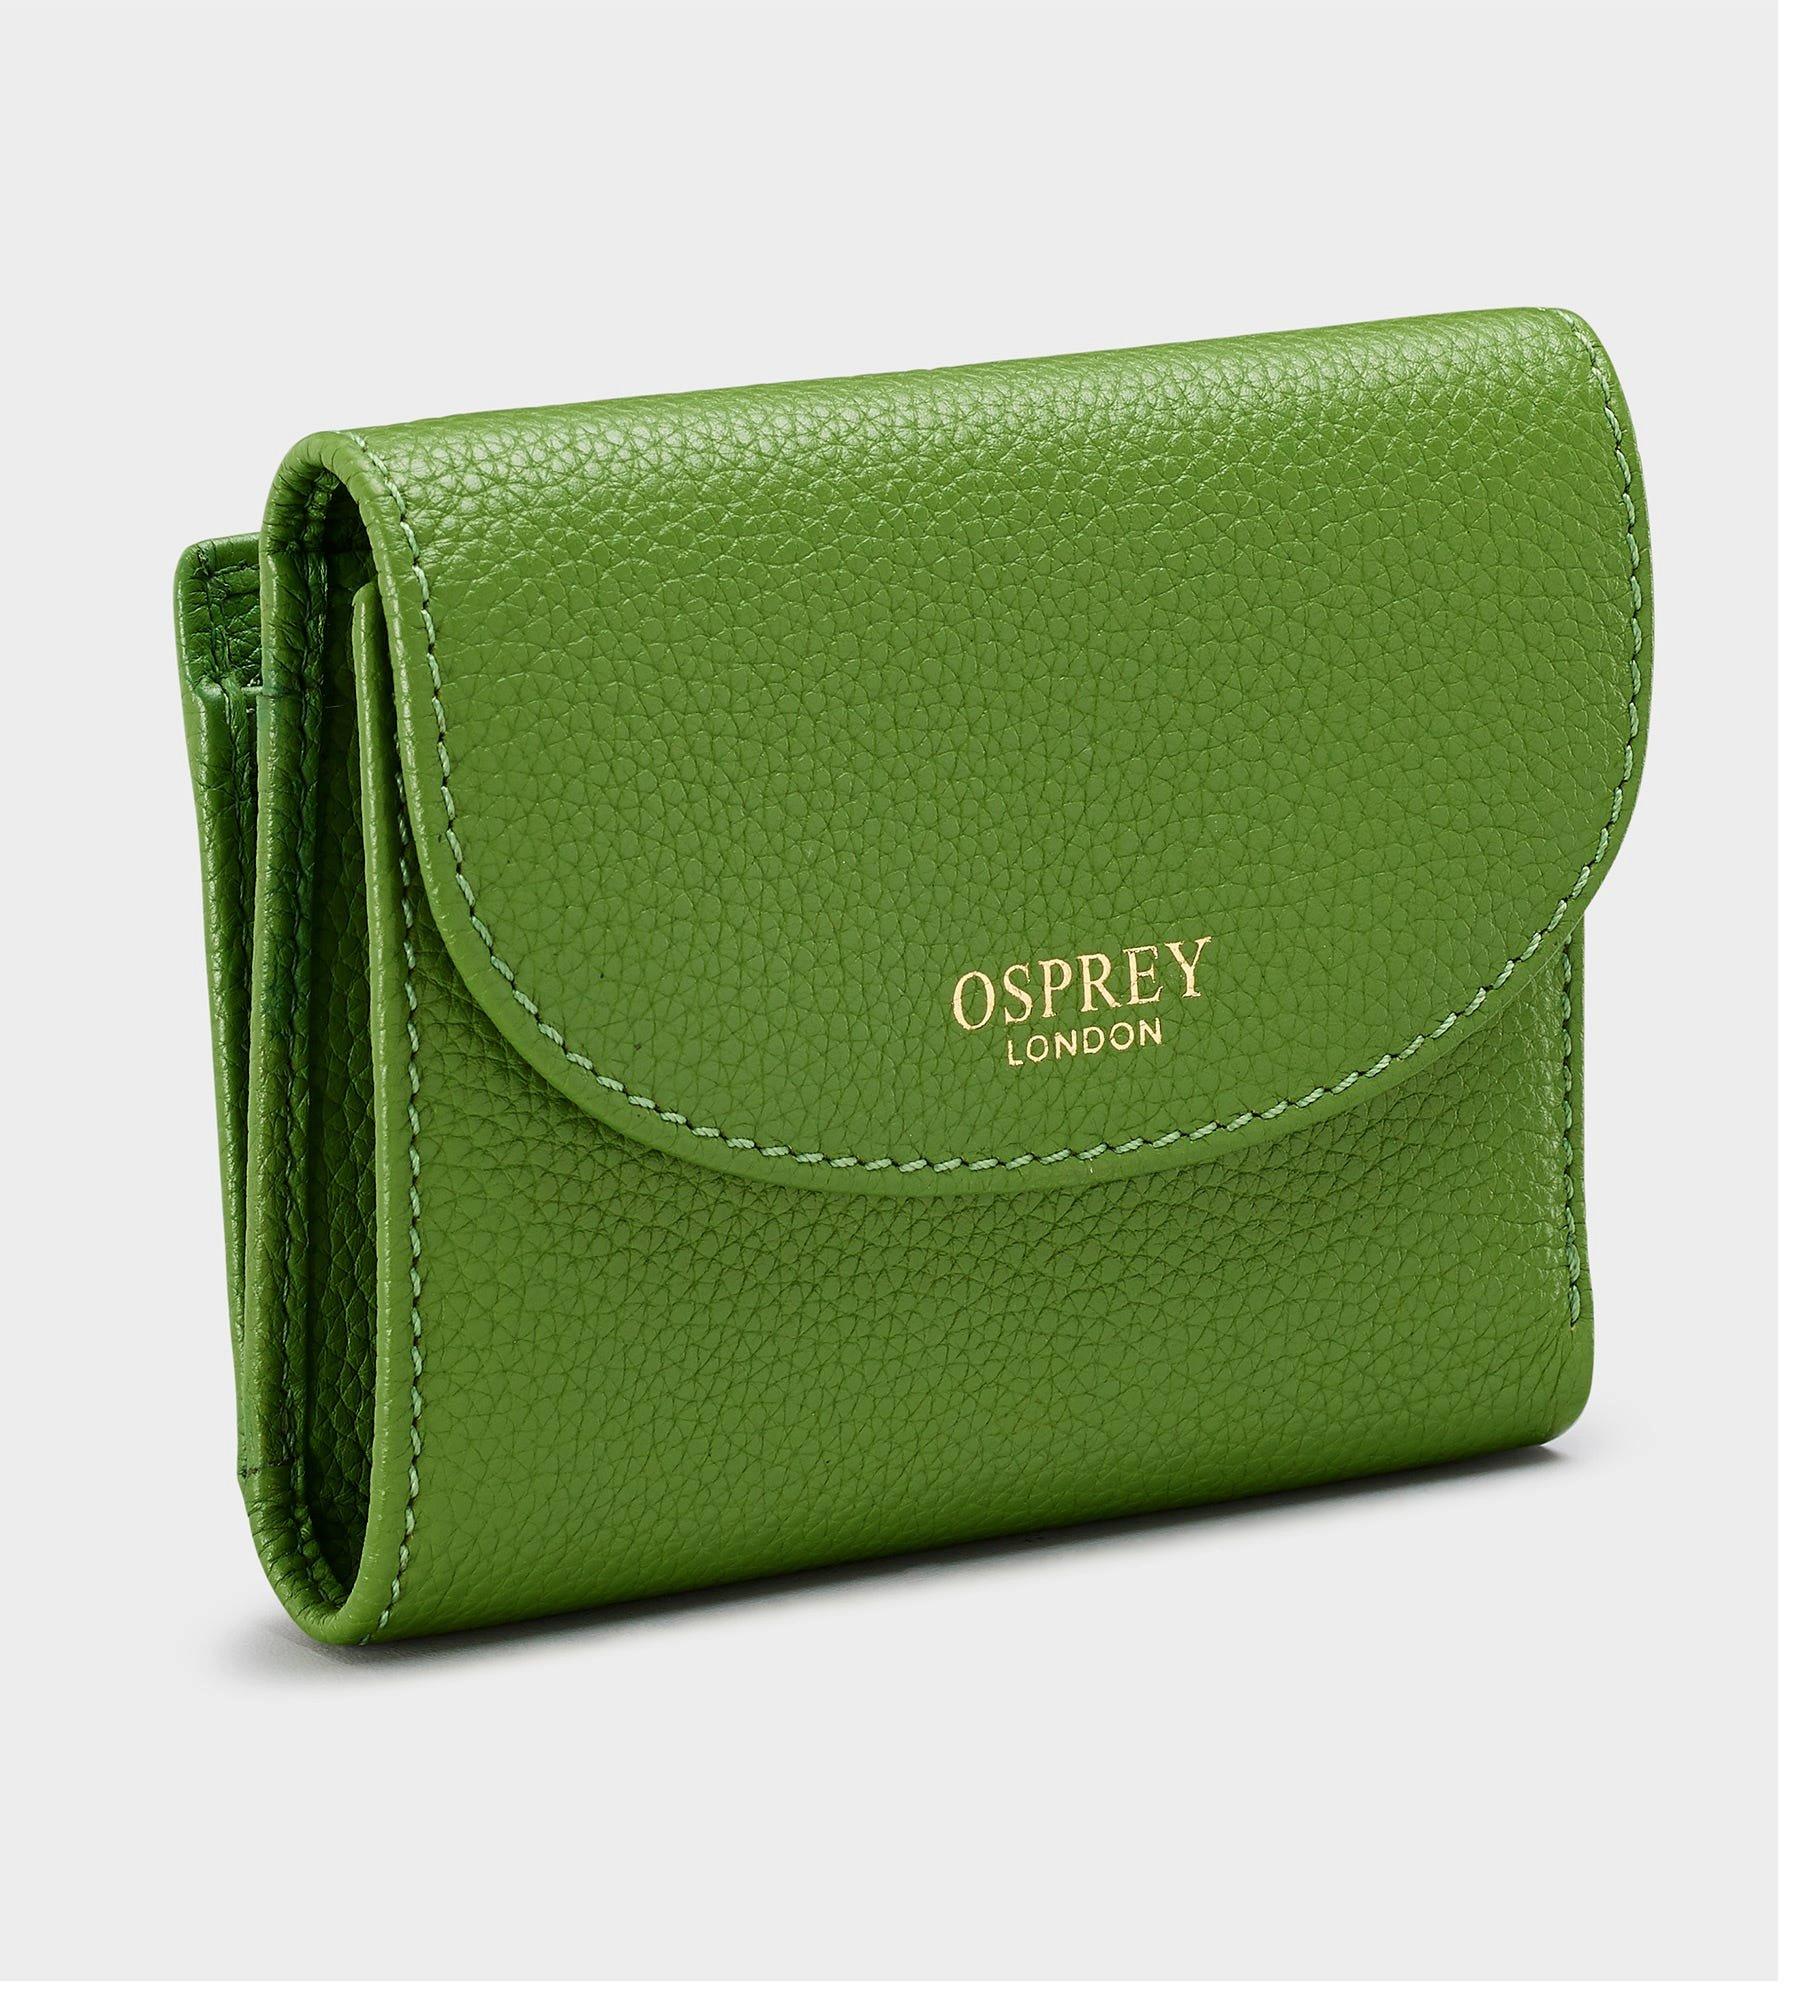 Osprey London | Bags | New Osprey London Leather Coin Purse By Graeme  Ellisdon | Poshmark